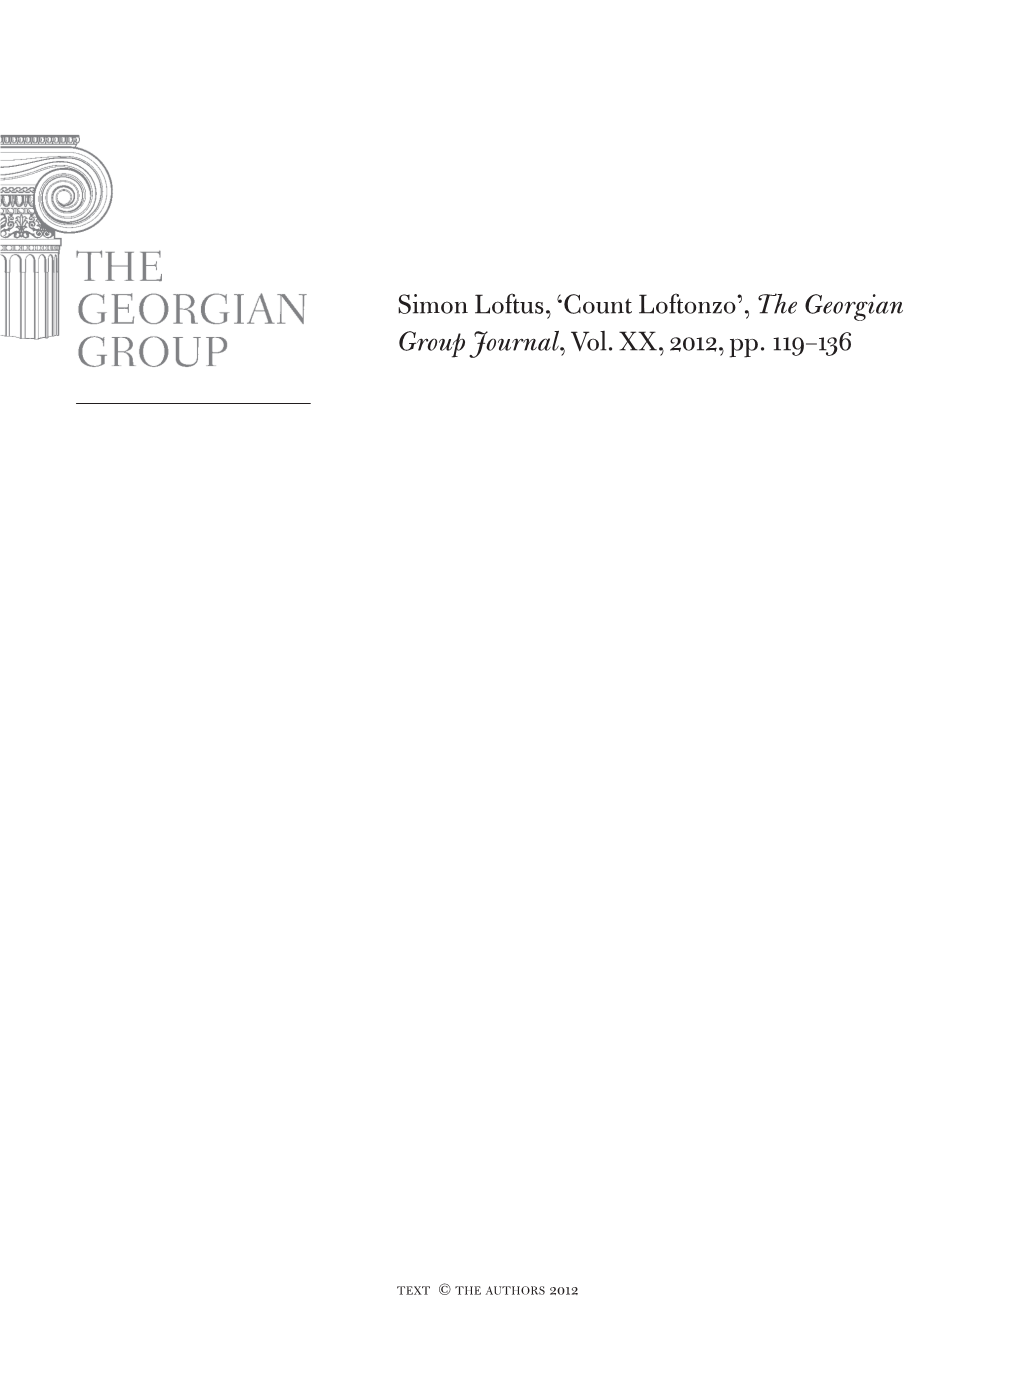 Simon Loftus, 'Count Loftonzo', the Georgian Group Journal, Vol. Xx